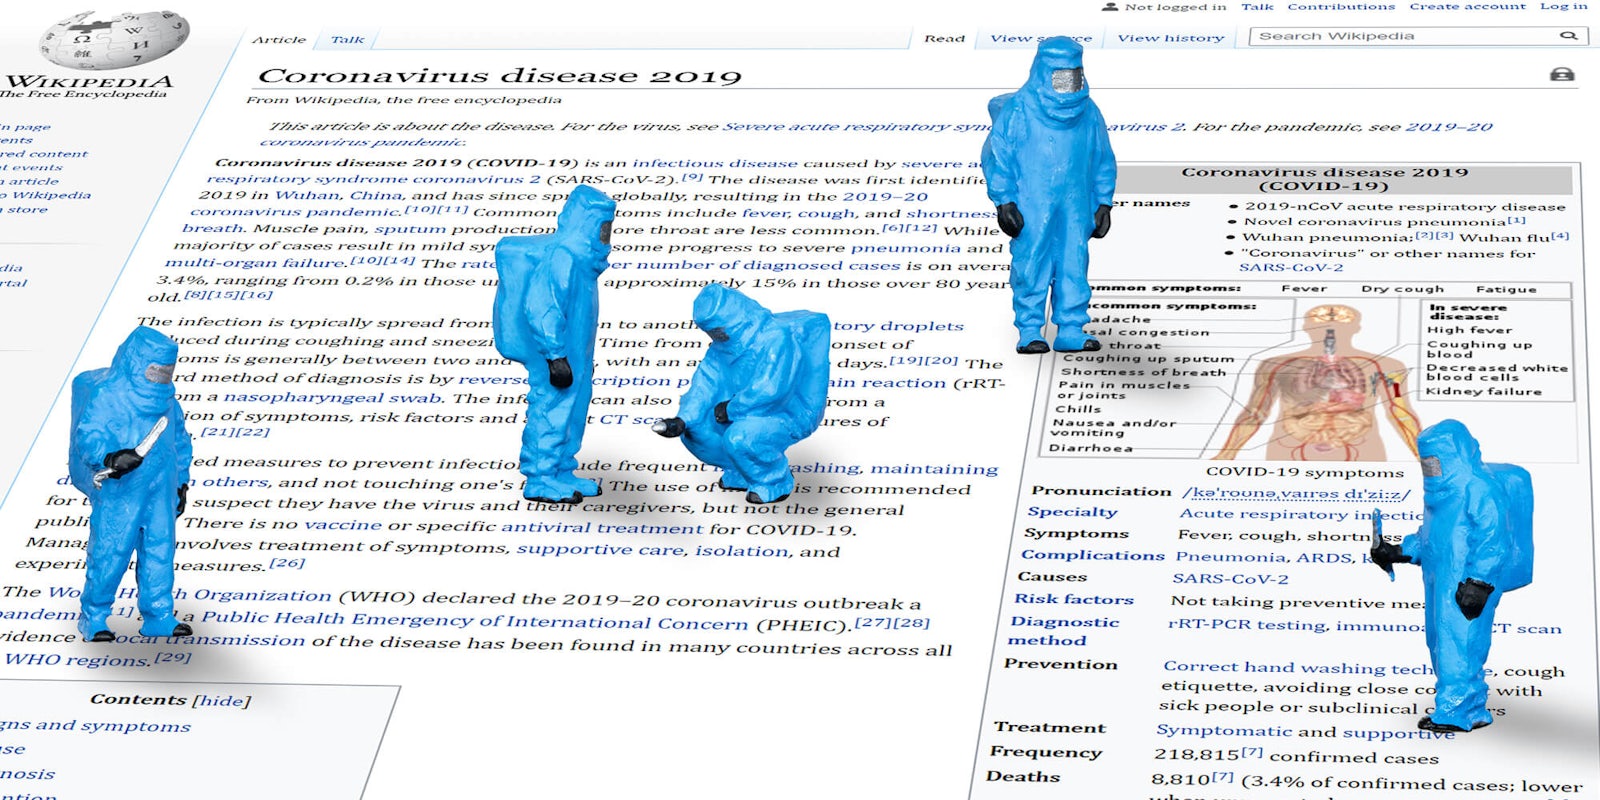 little scientists in hazmat suits examining Wikipedia's coronavirus page